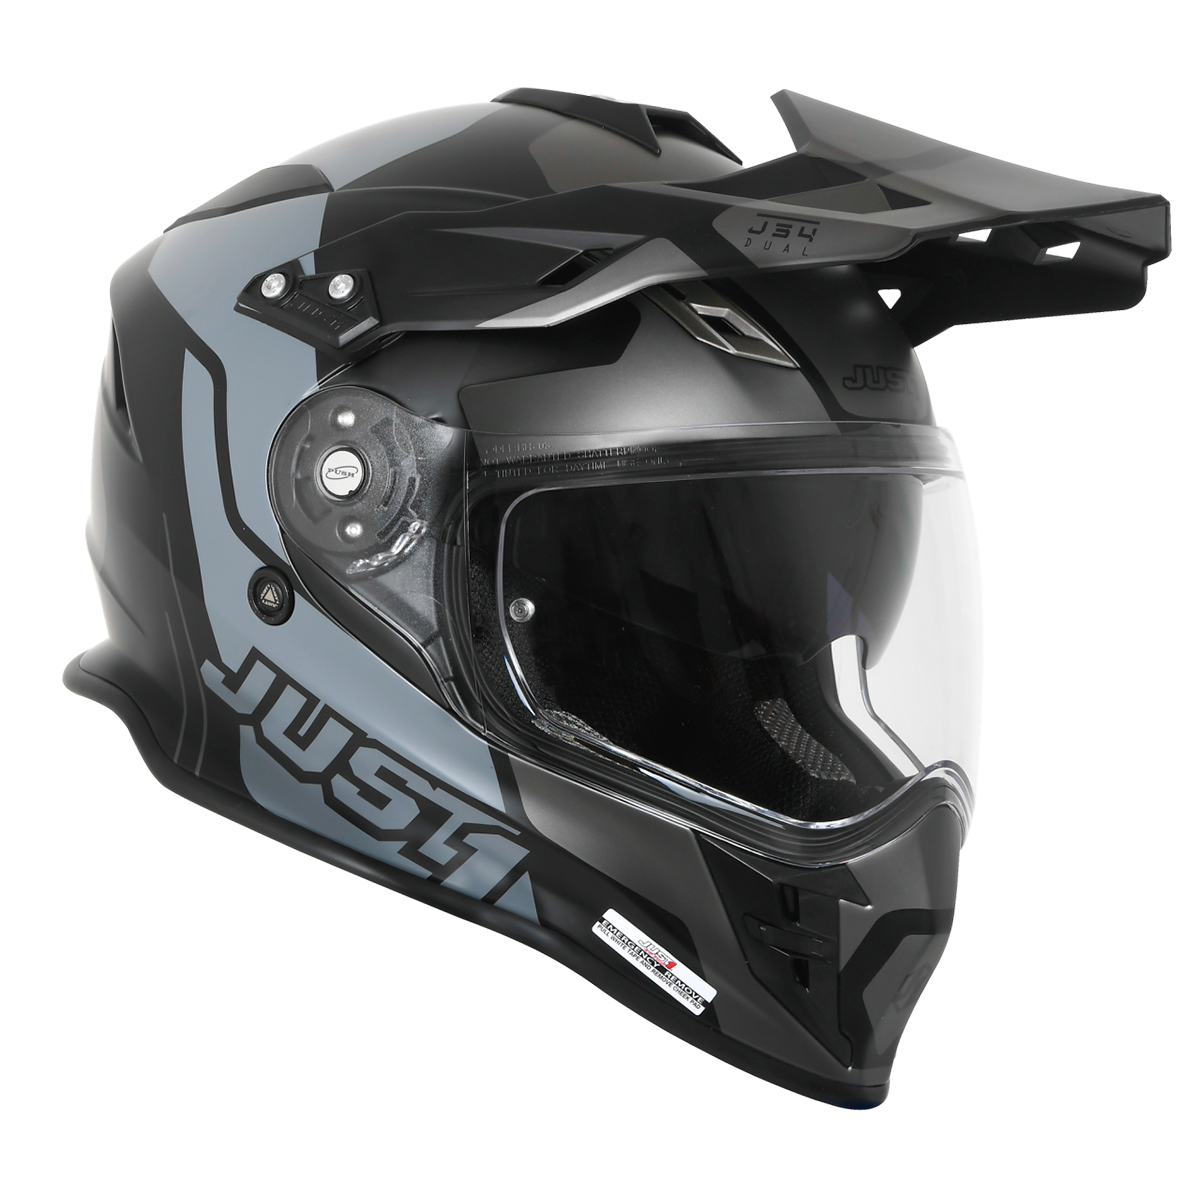 JUST1 J34 Pro Tour Helmet